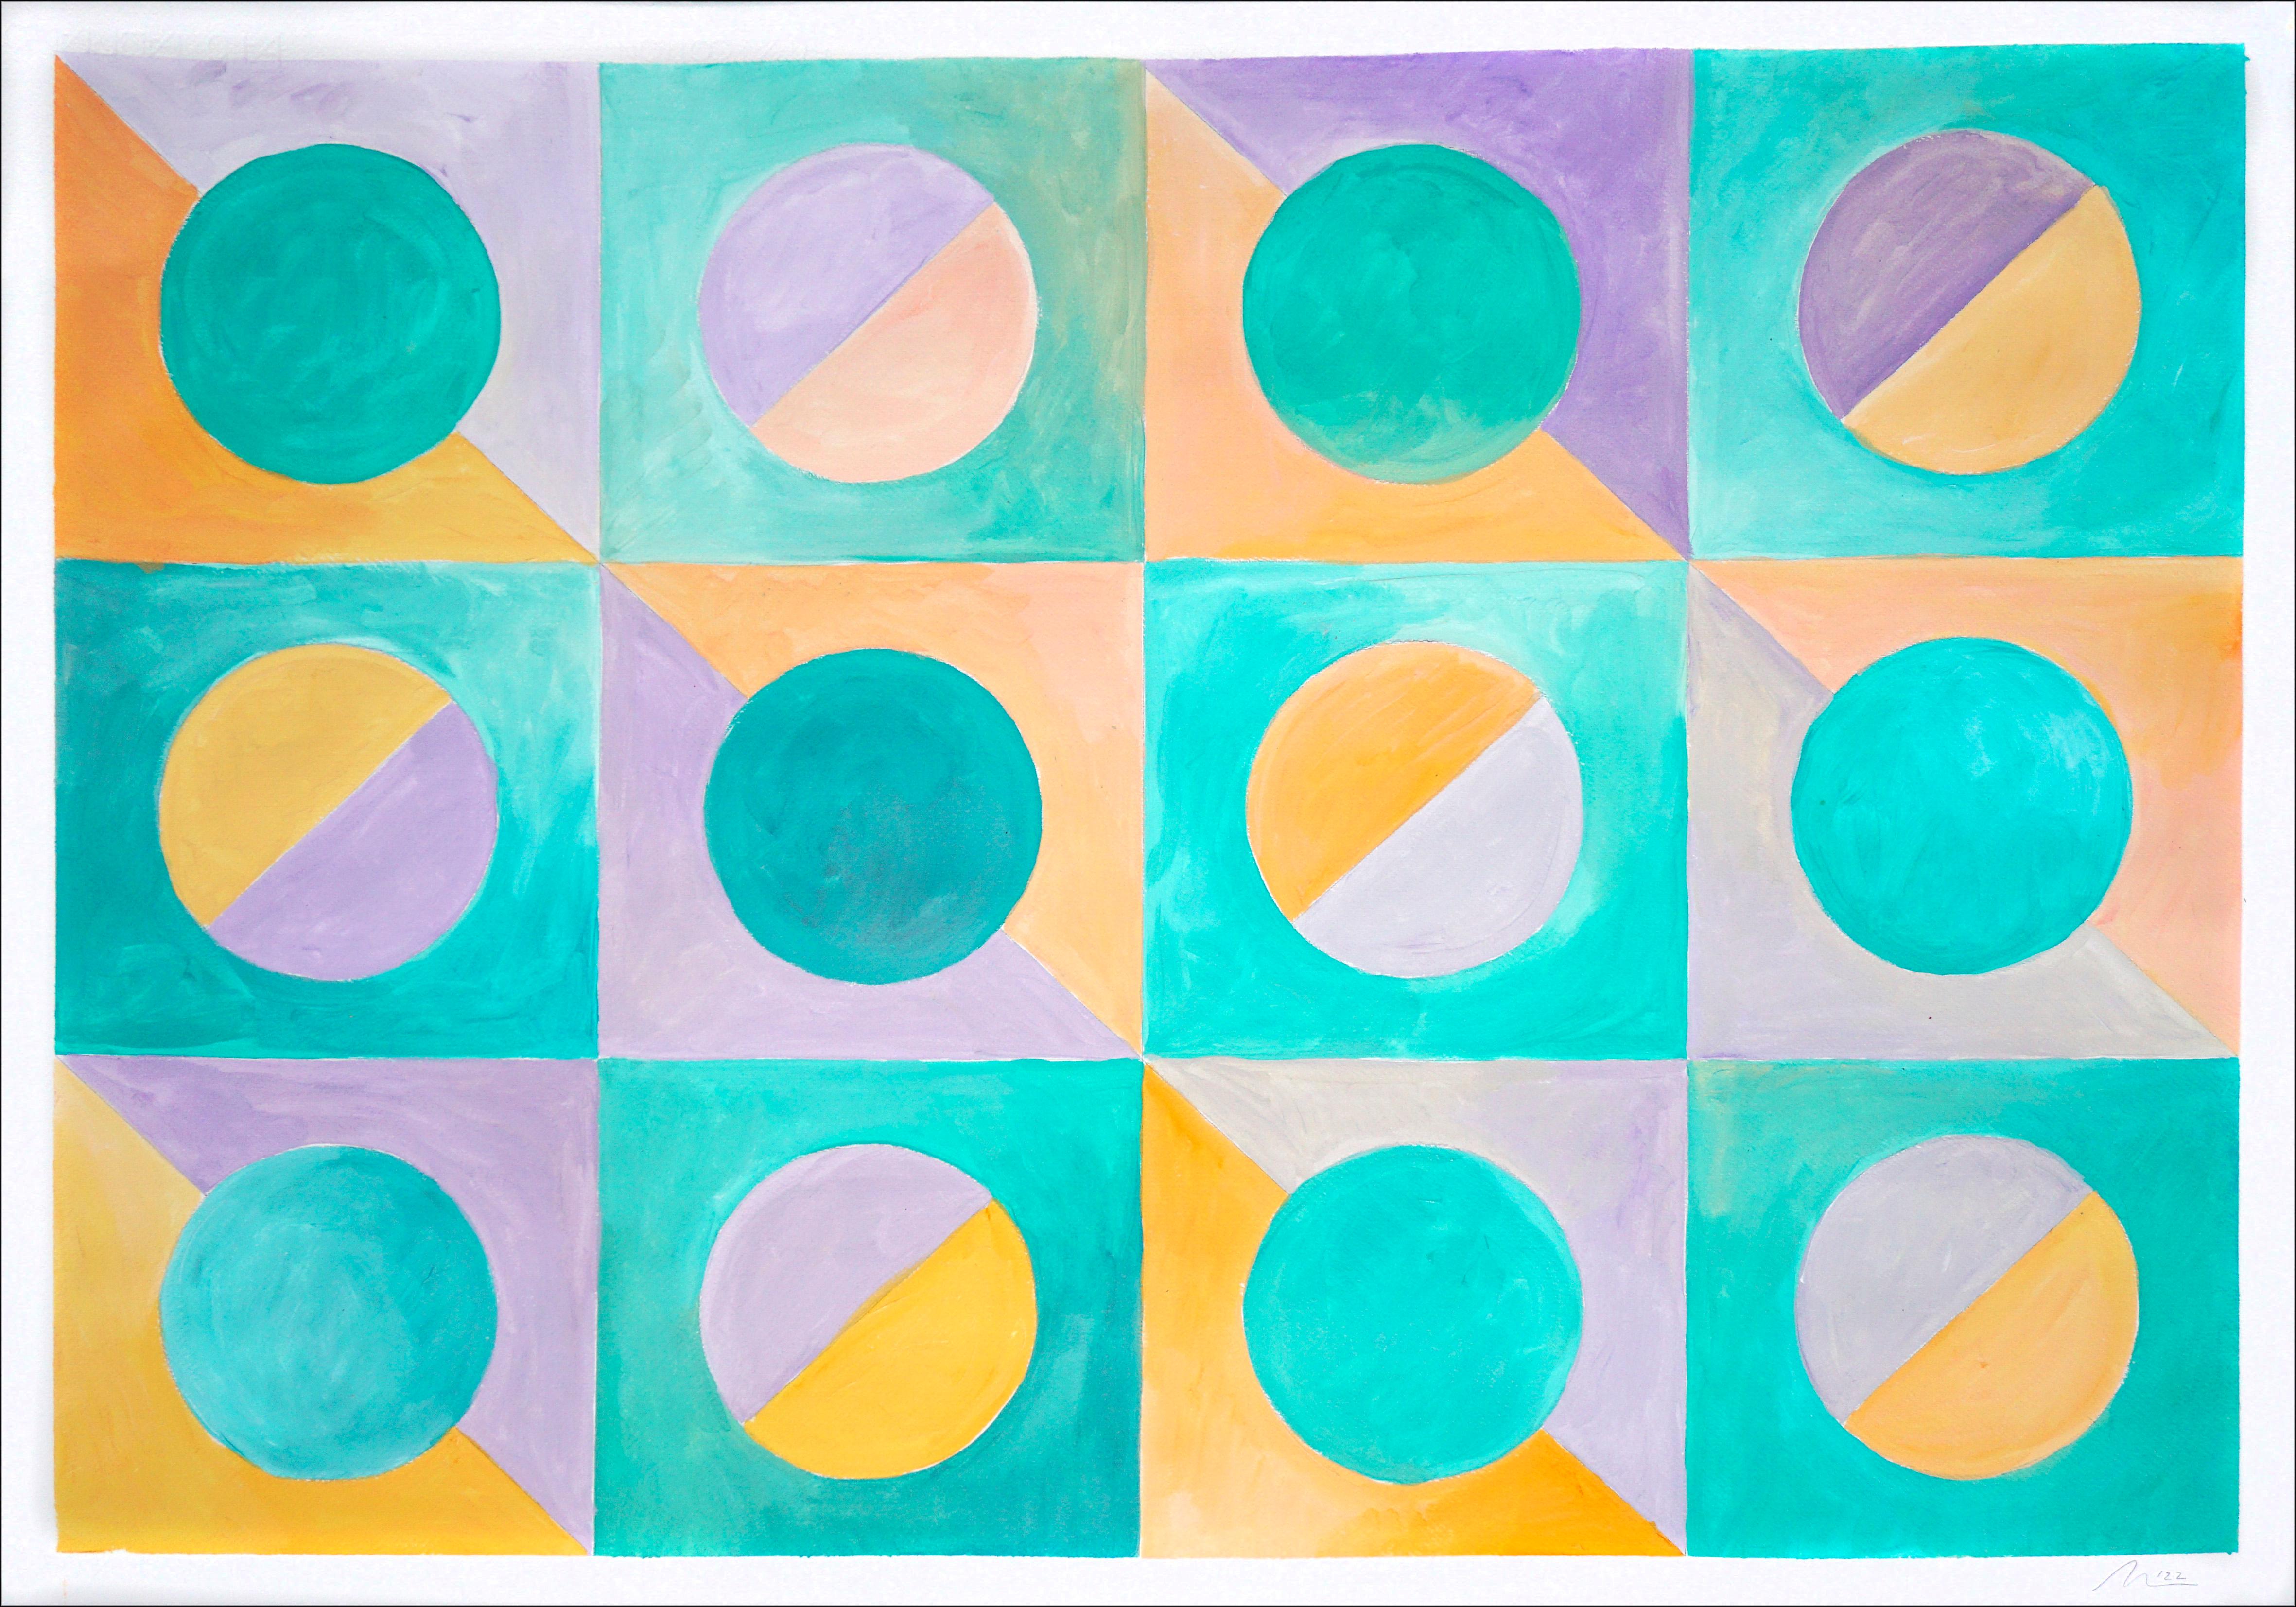 Natalia Roman Landscape Painting - Pastel Tile Field, Turquoise & Yellow Patterns, Mauve Accents Geometry on Paper